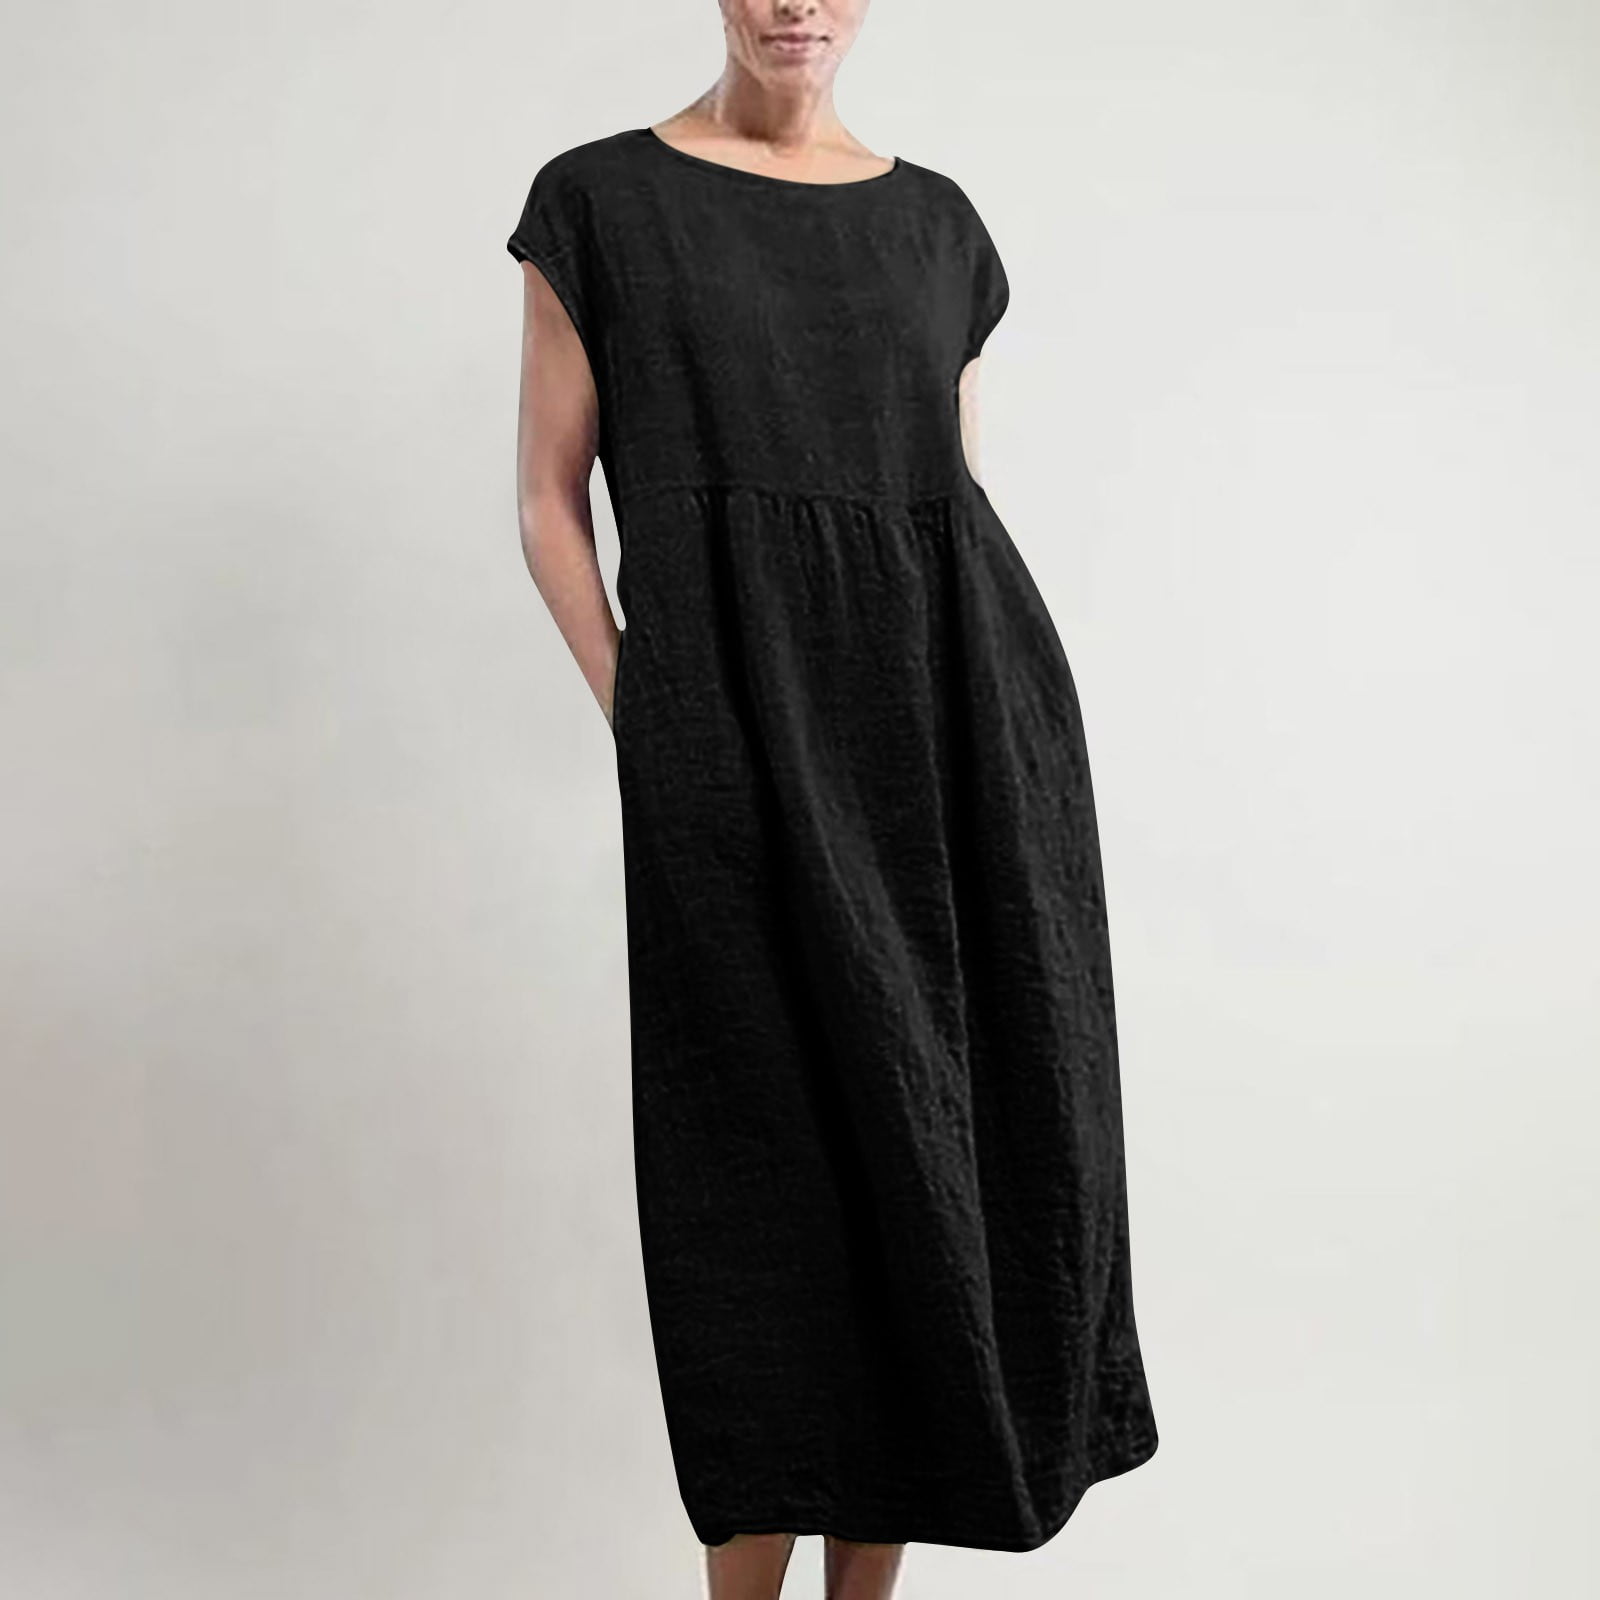 Baggy Kaftan Long Dress for Women Plus Size Linen Dresses Summer Casual ...